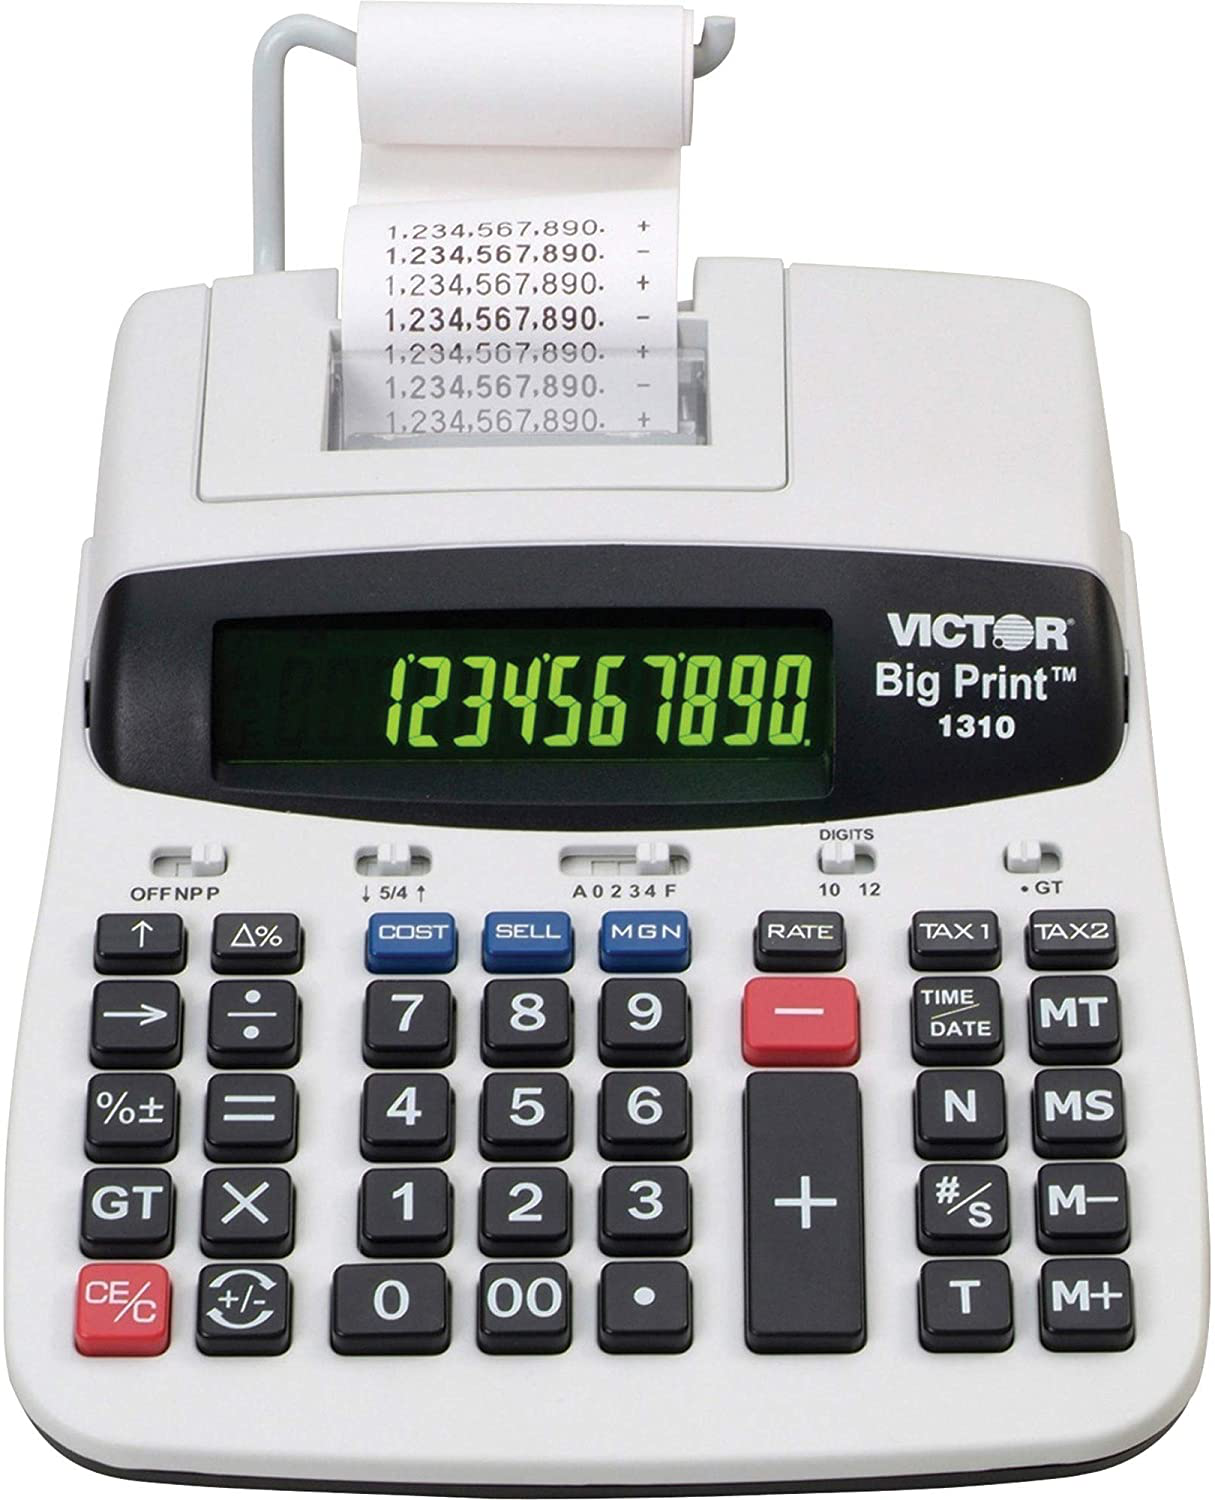 Victor 1310 Big Print Commercial Printing Calculator